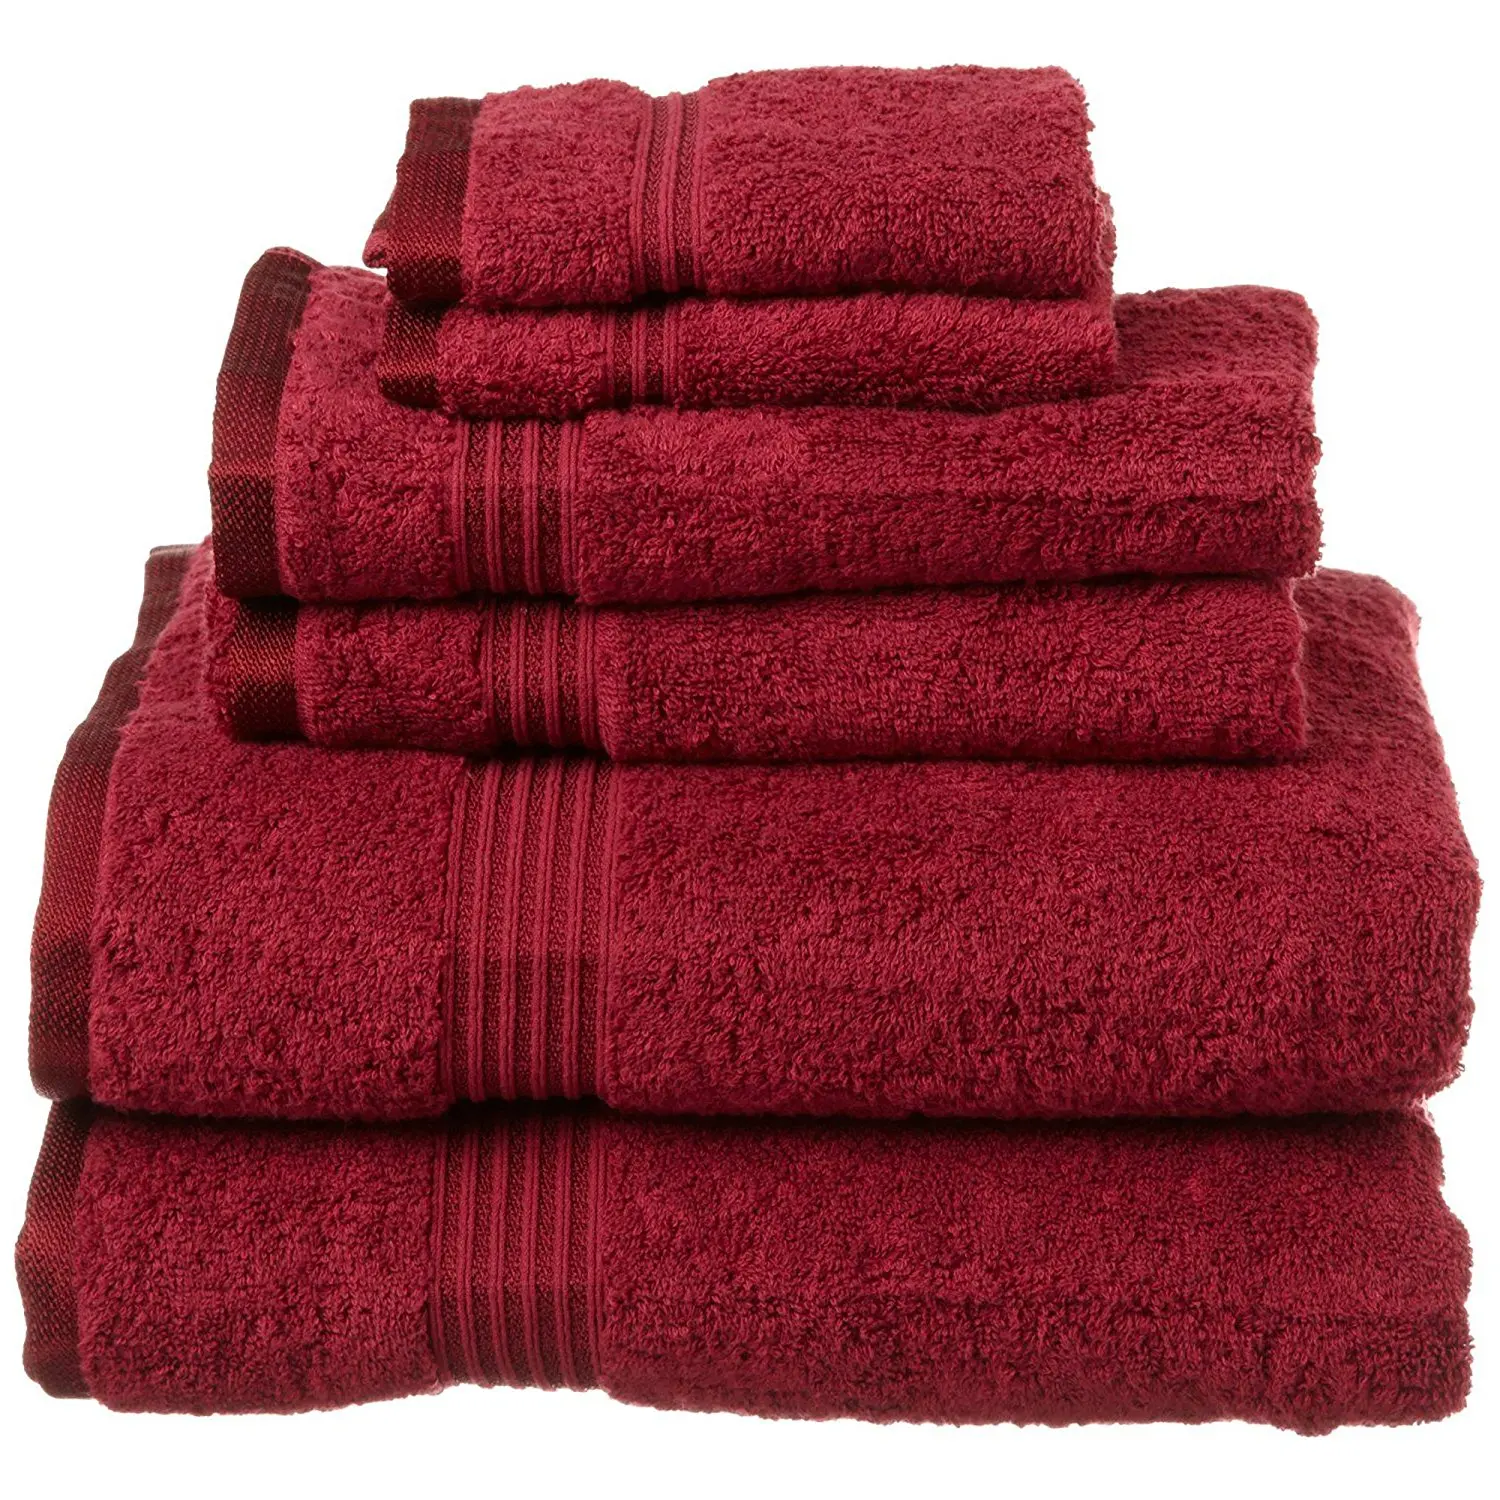 Cheap Burgundy Towels, find Burgundy Towels deals on line at Alibaba.com